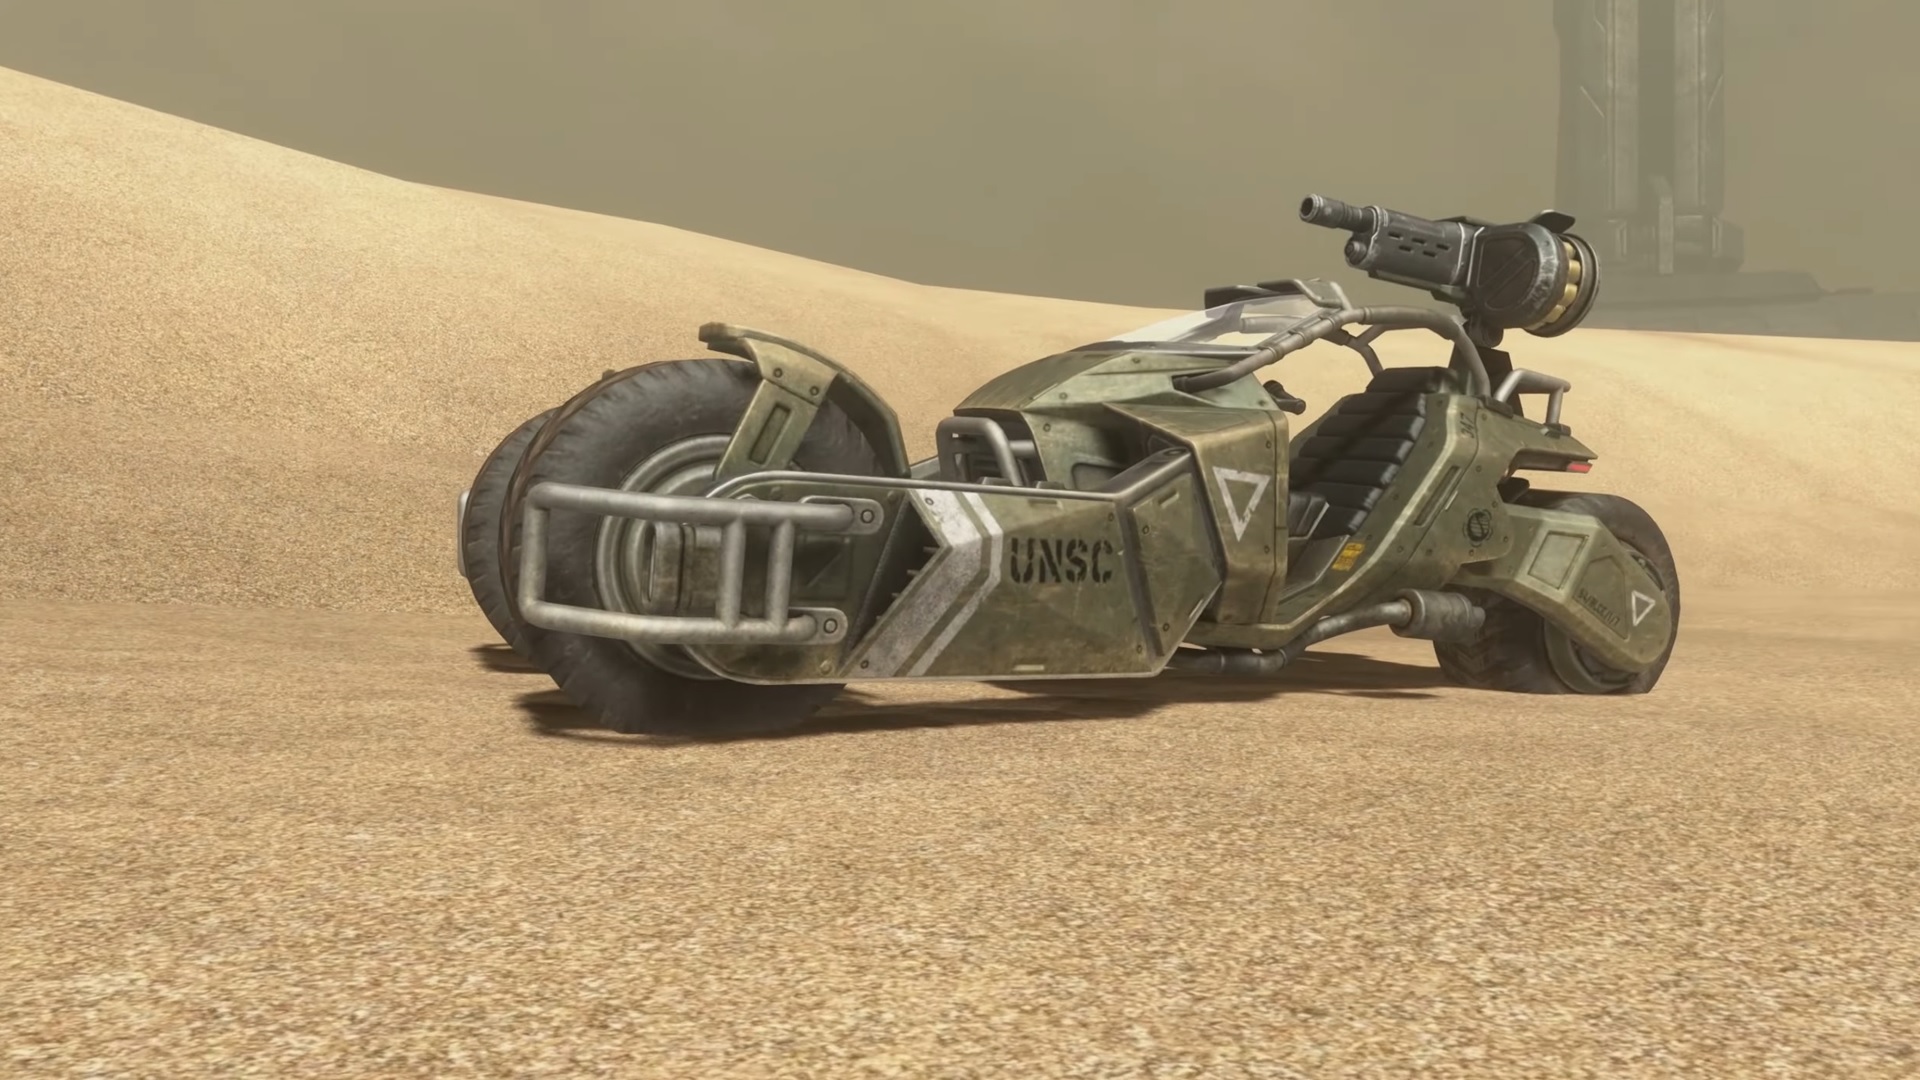 Halo 3 Jackrabbit mod